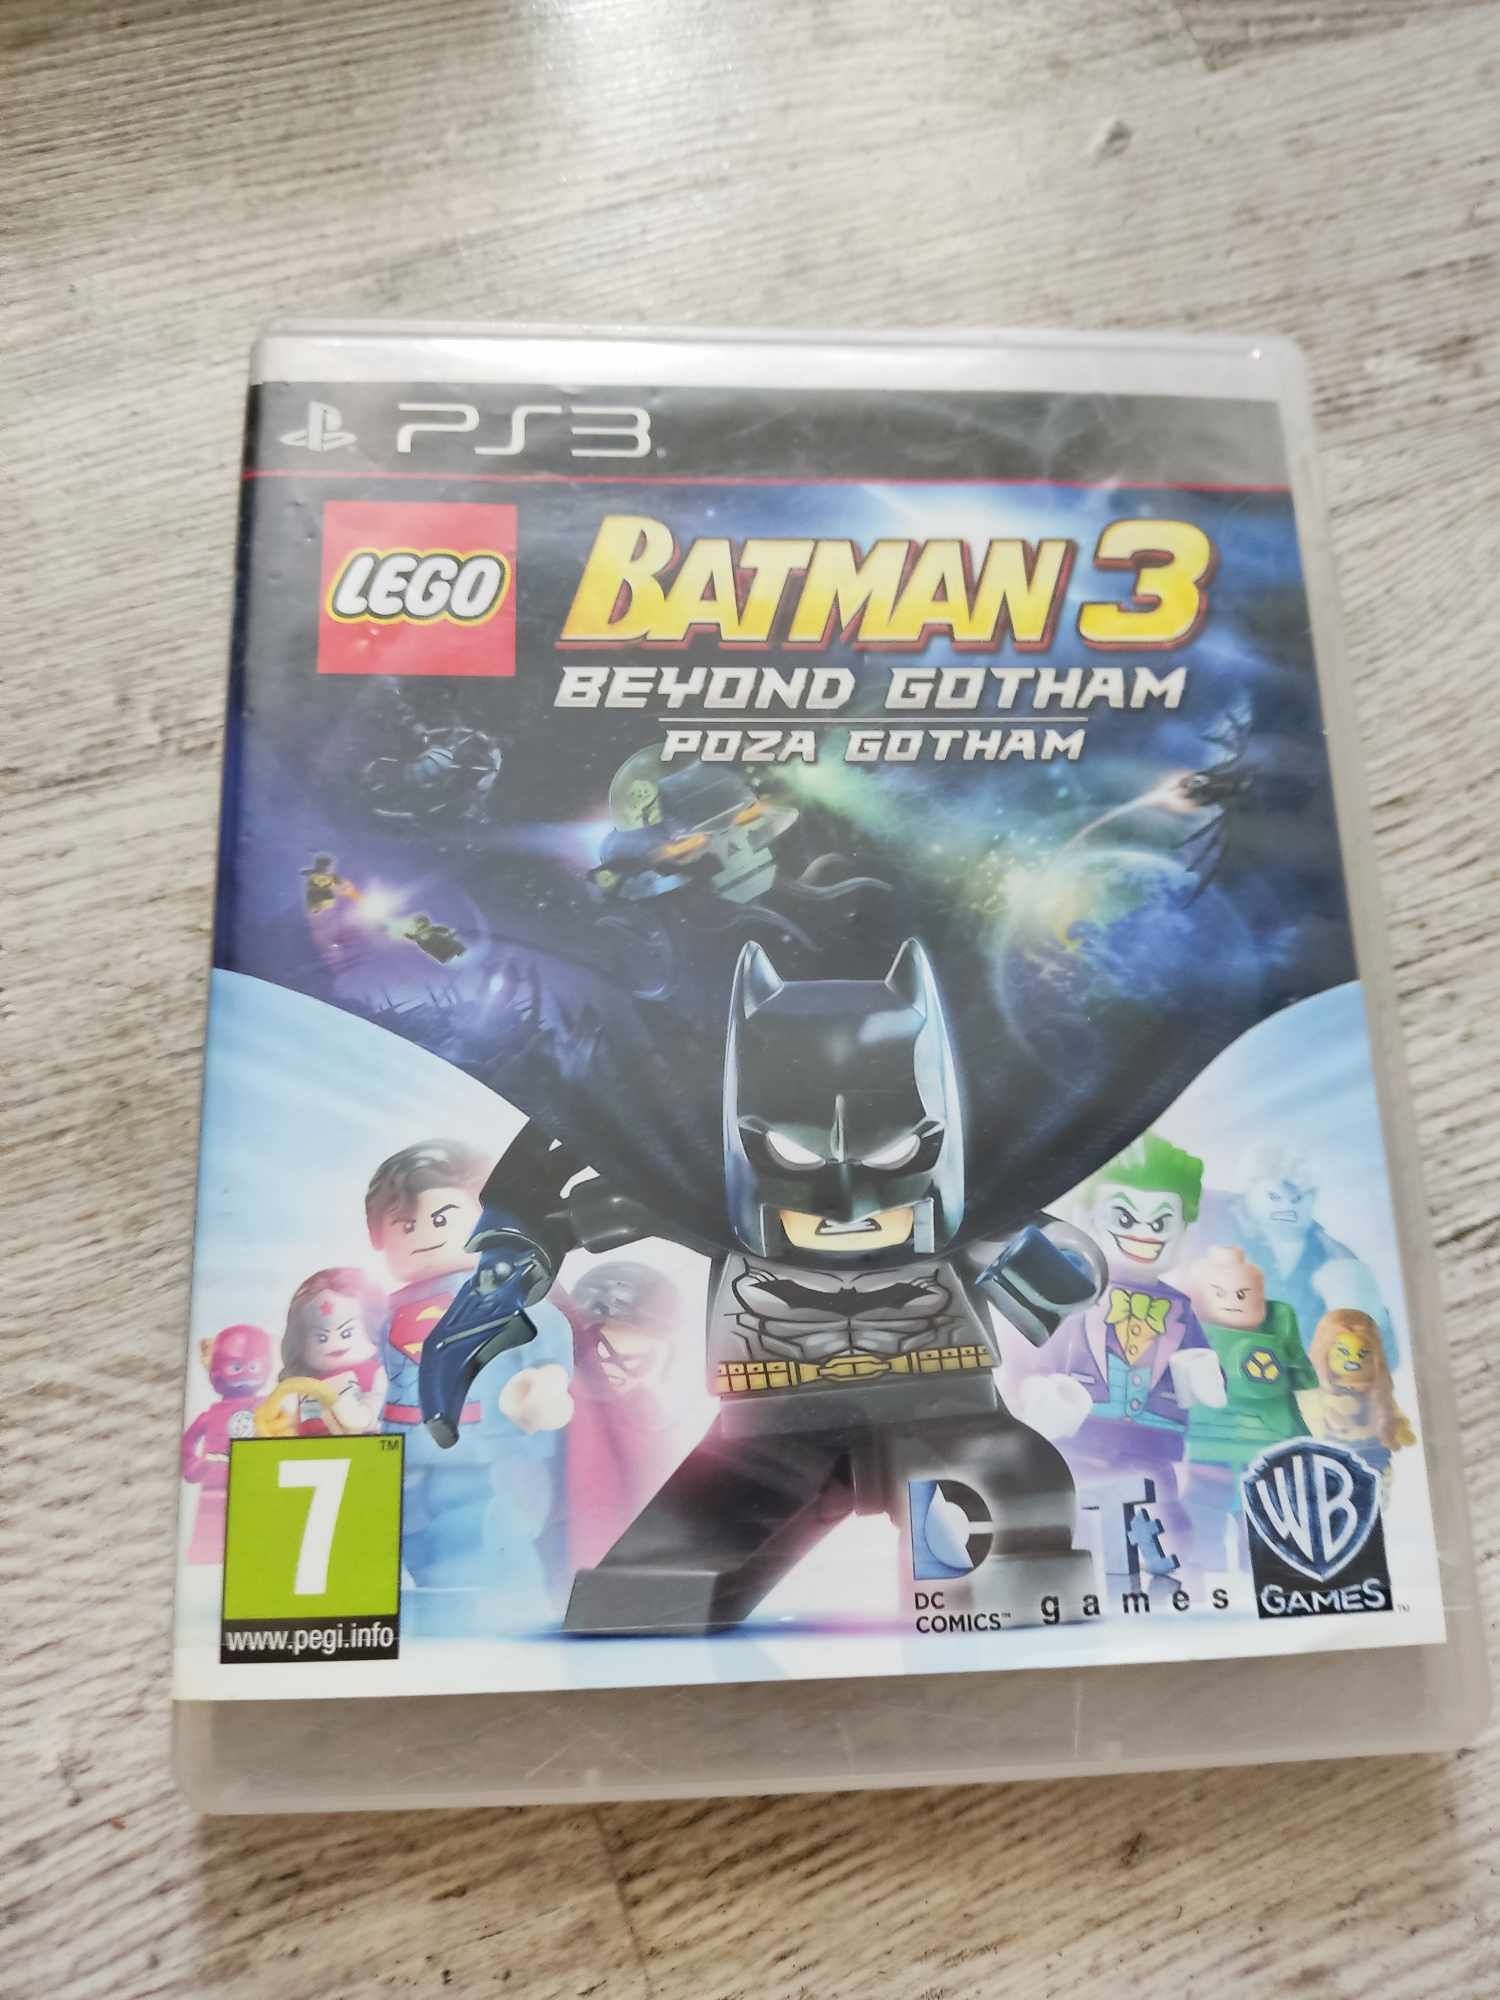 Gra Batman poza Gotham na PlayStation 3, PS 3